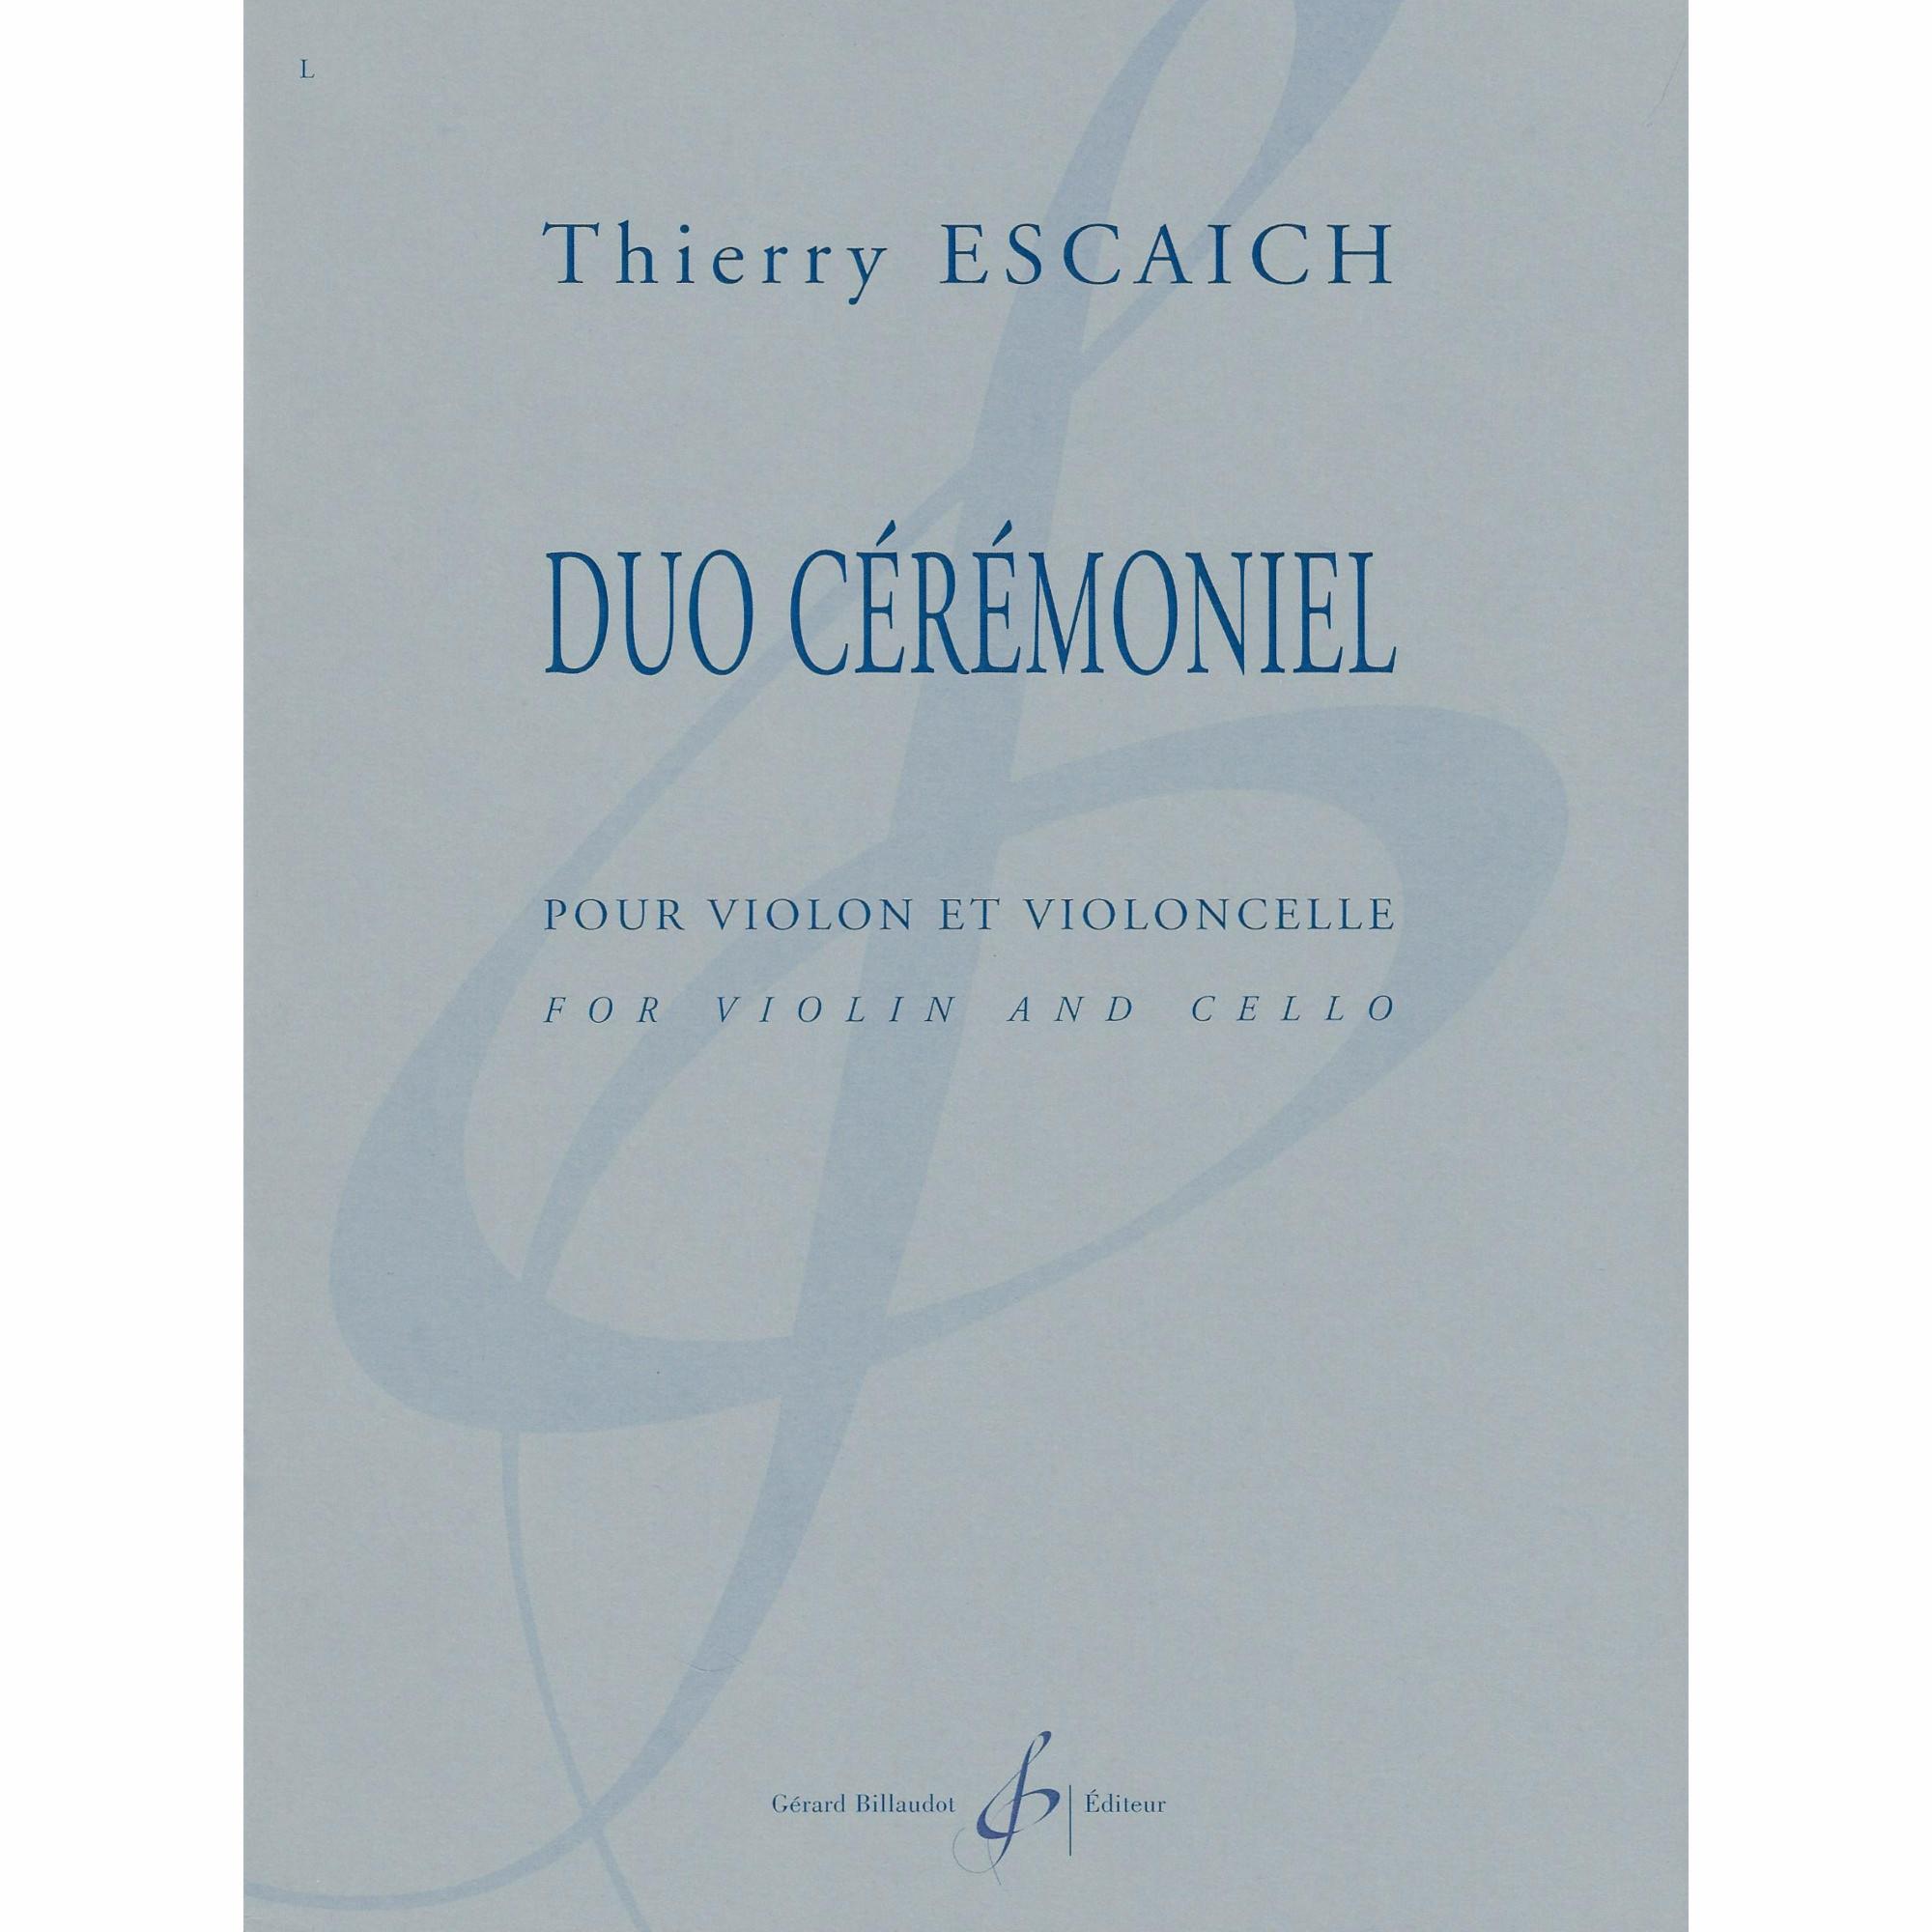 Escaich -- Duo Ceremoniel for Violin and Cello